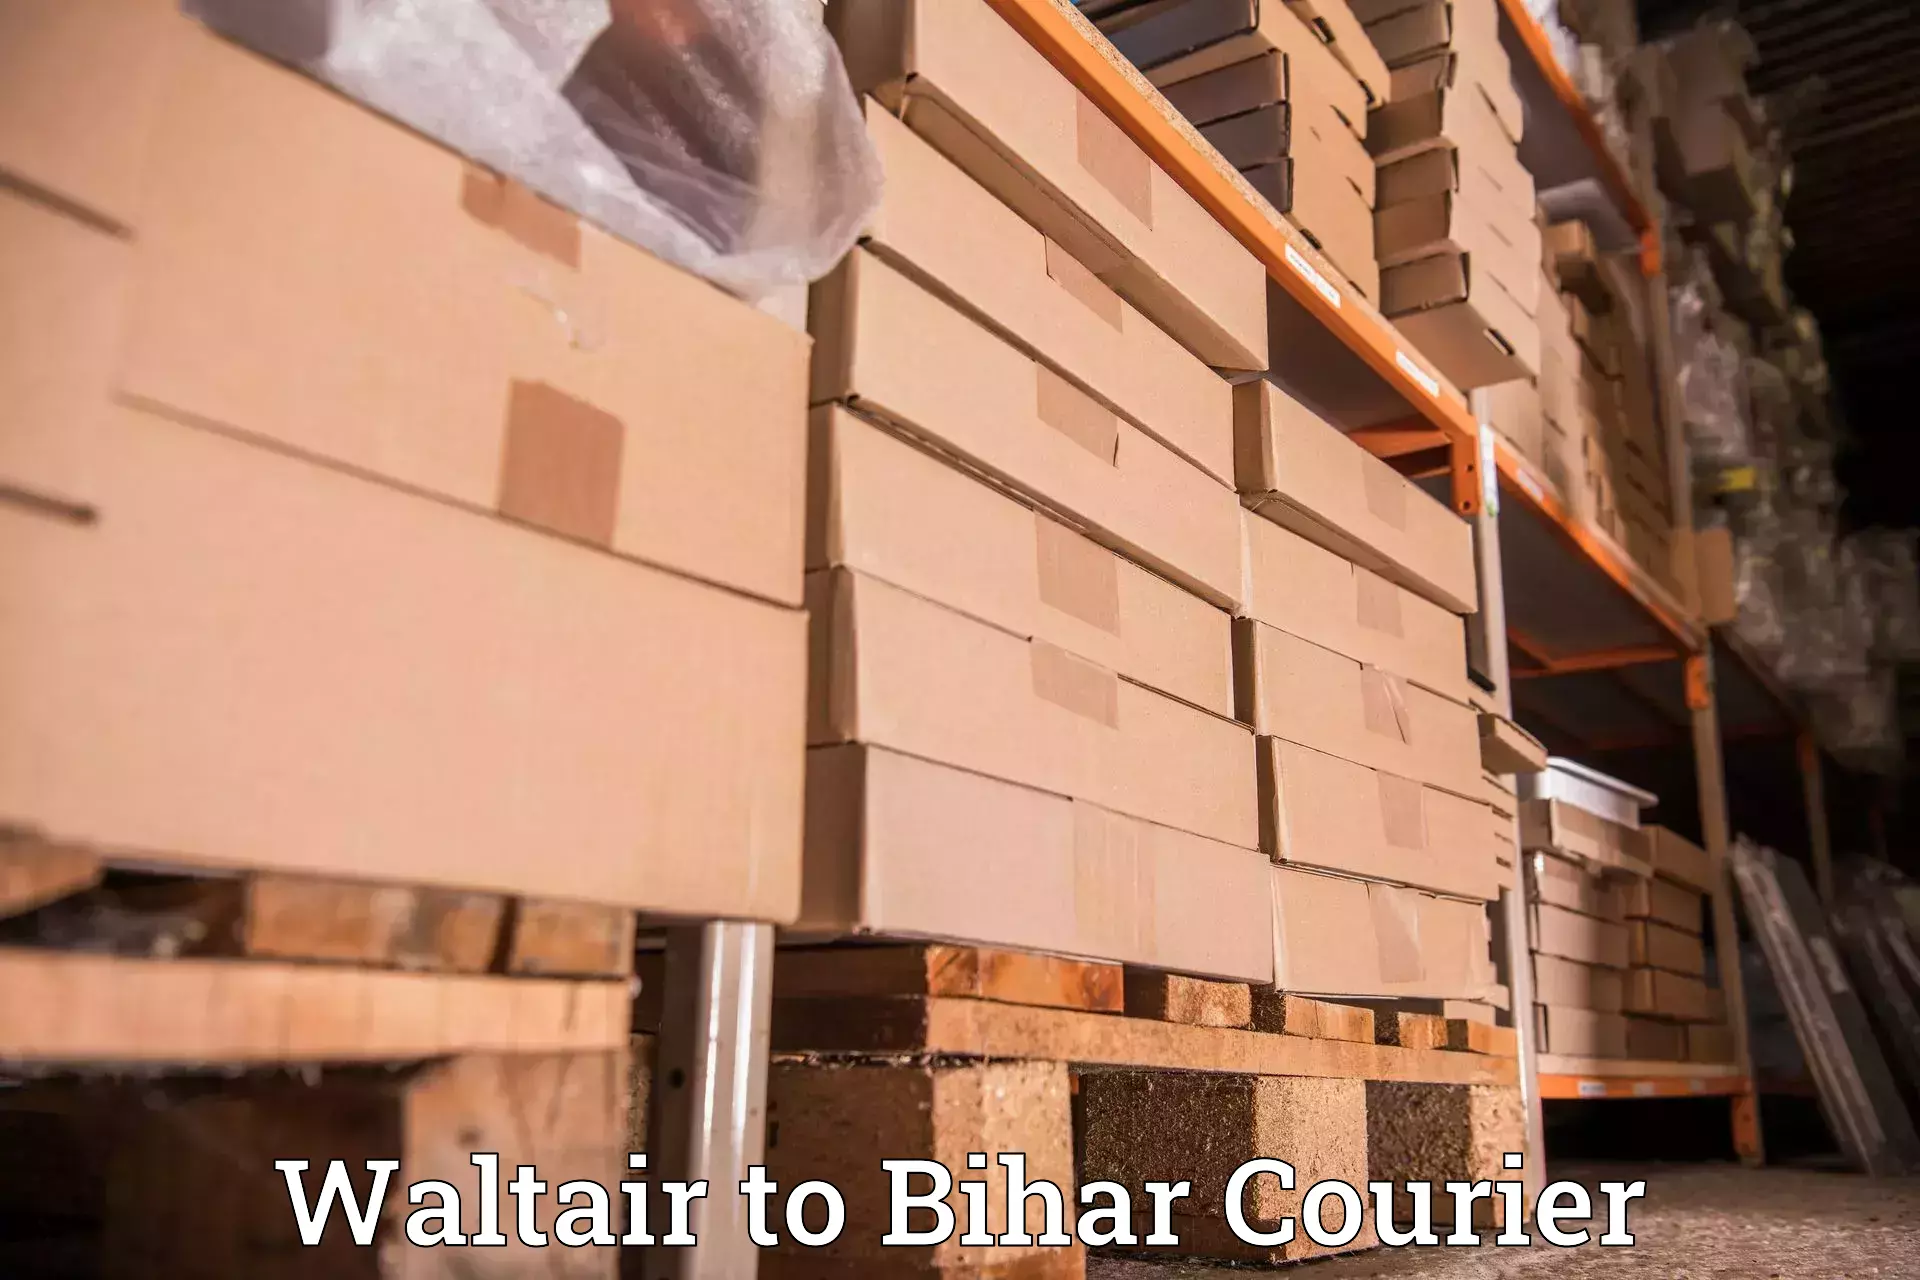 Courier service comparison Waltair to Bihar